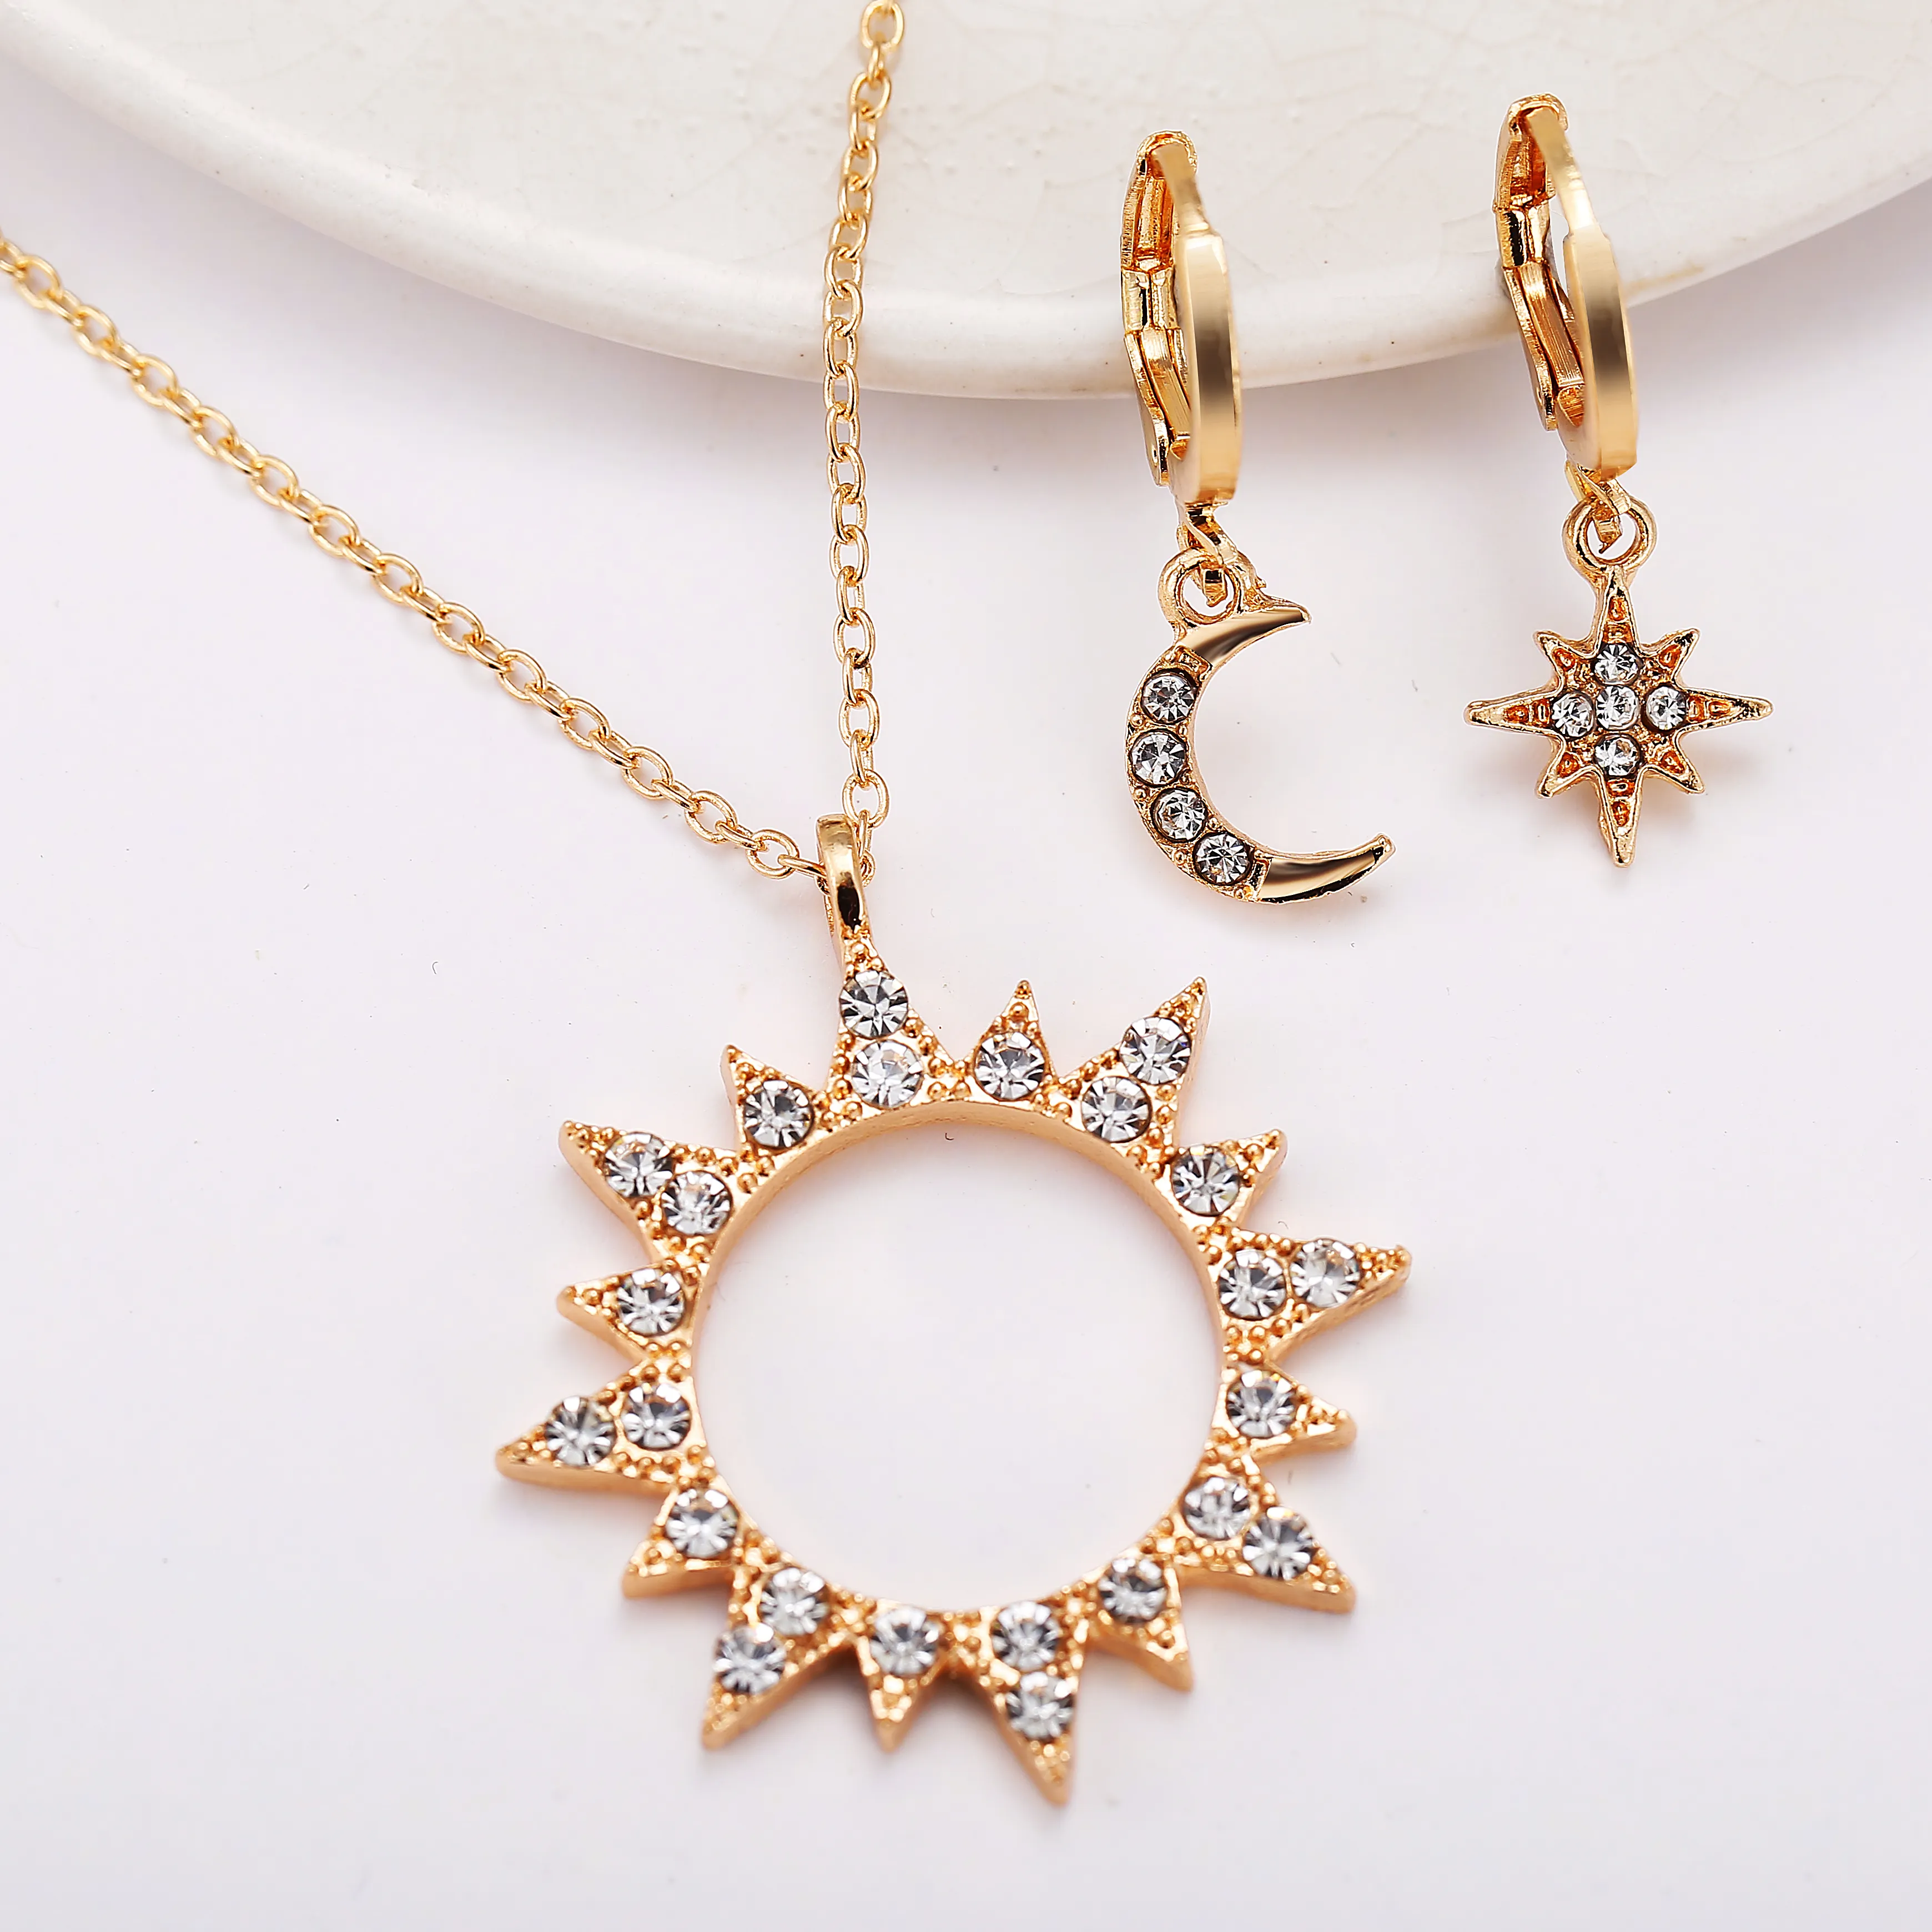 Finetoo New Crystal Star Moon Sun Necklace Set Women's Gold Pendant Earring Gift Elegant Fashion Jewelry Set Gift